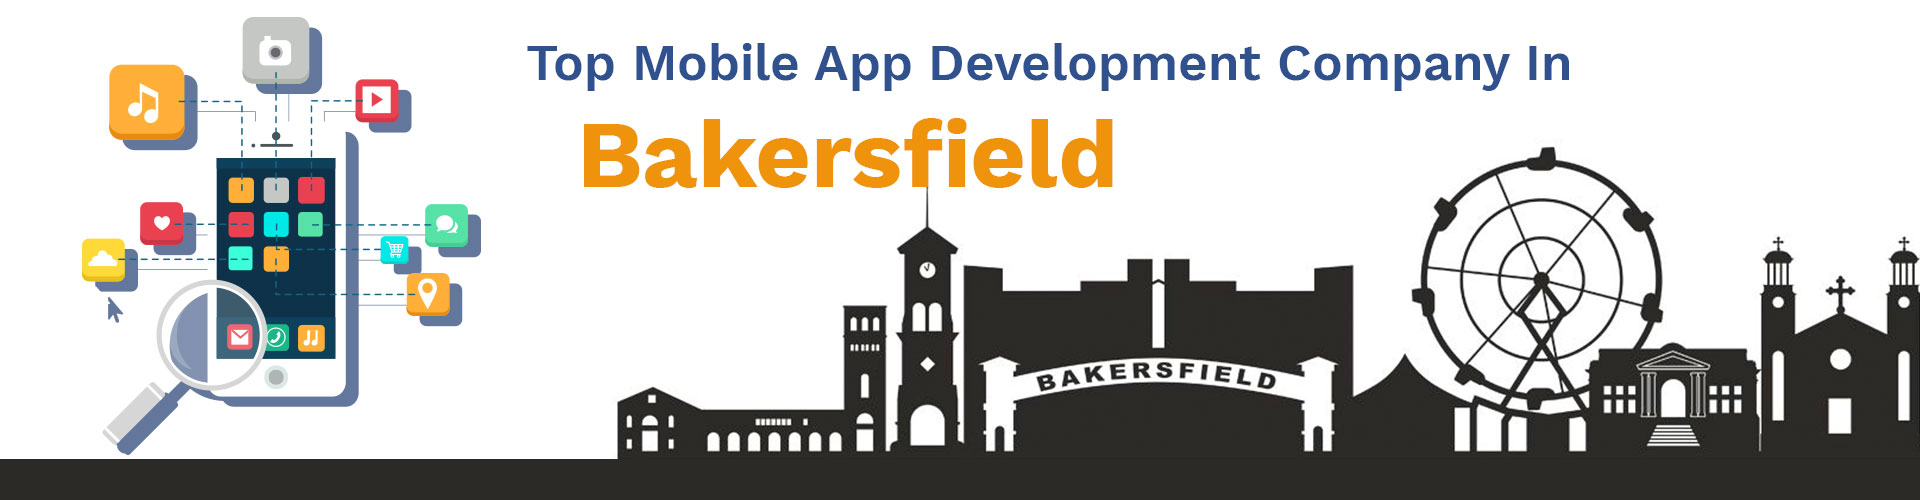 mobile app development company bakersfield